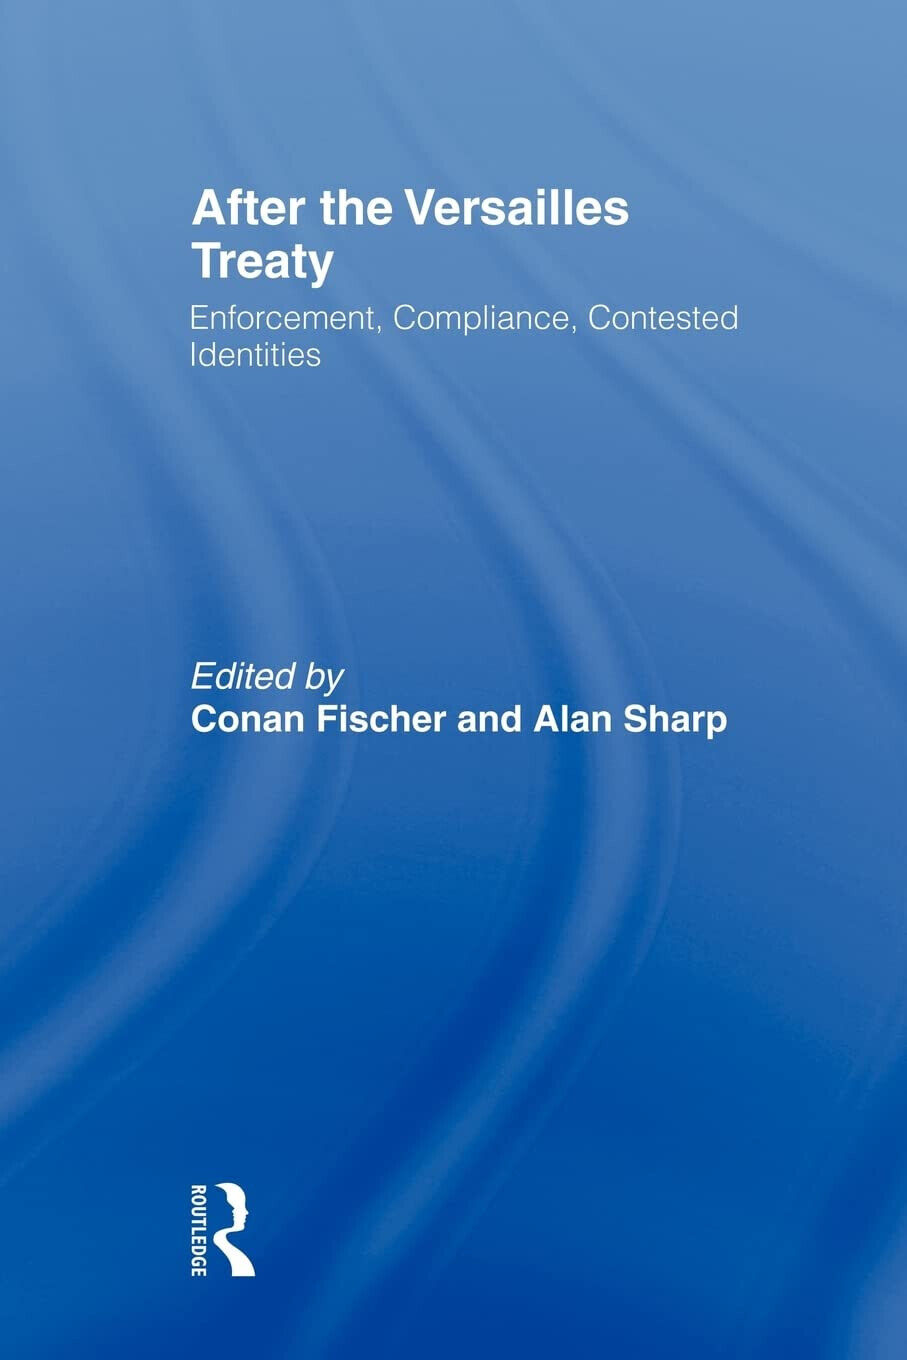 After the Versailles Treaty - Conan Fischer - Routledge, 2009